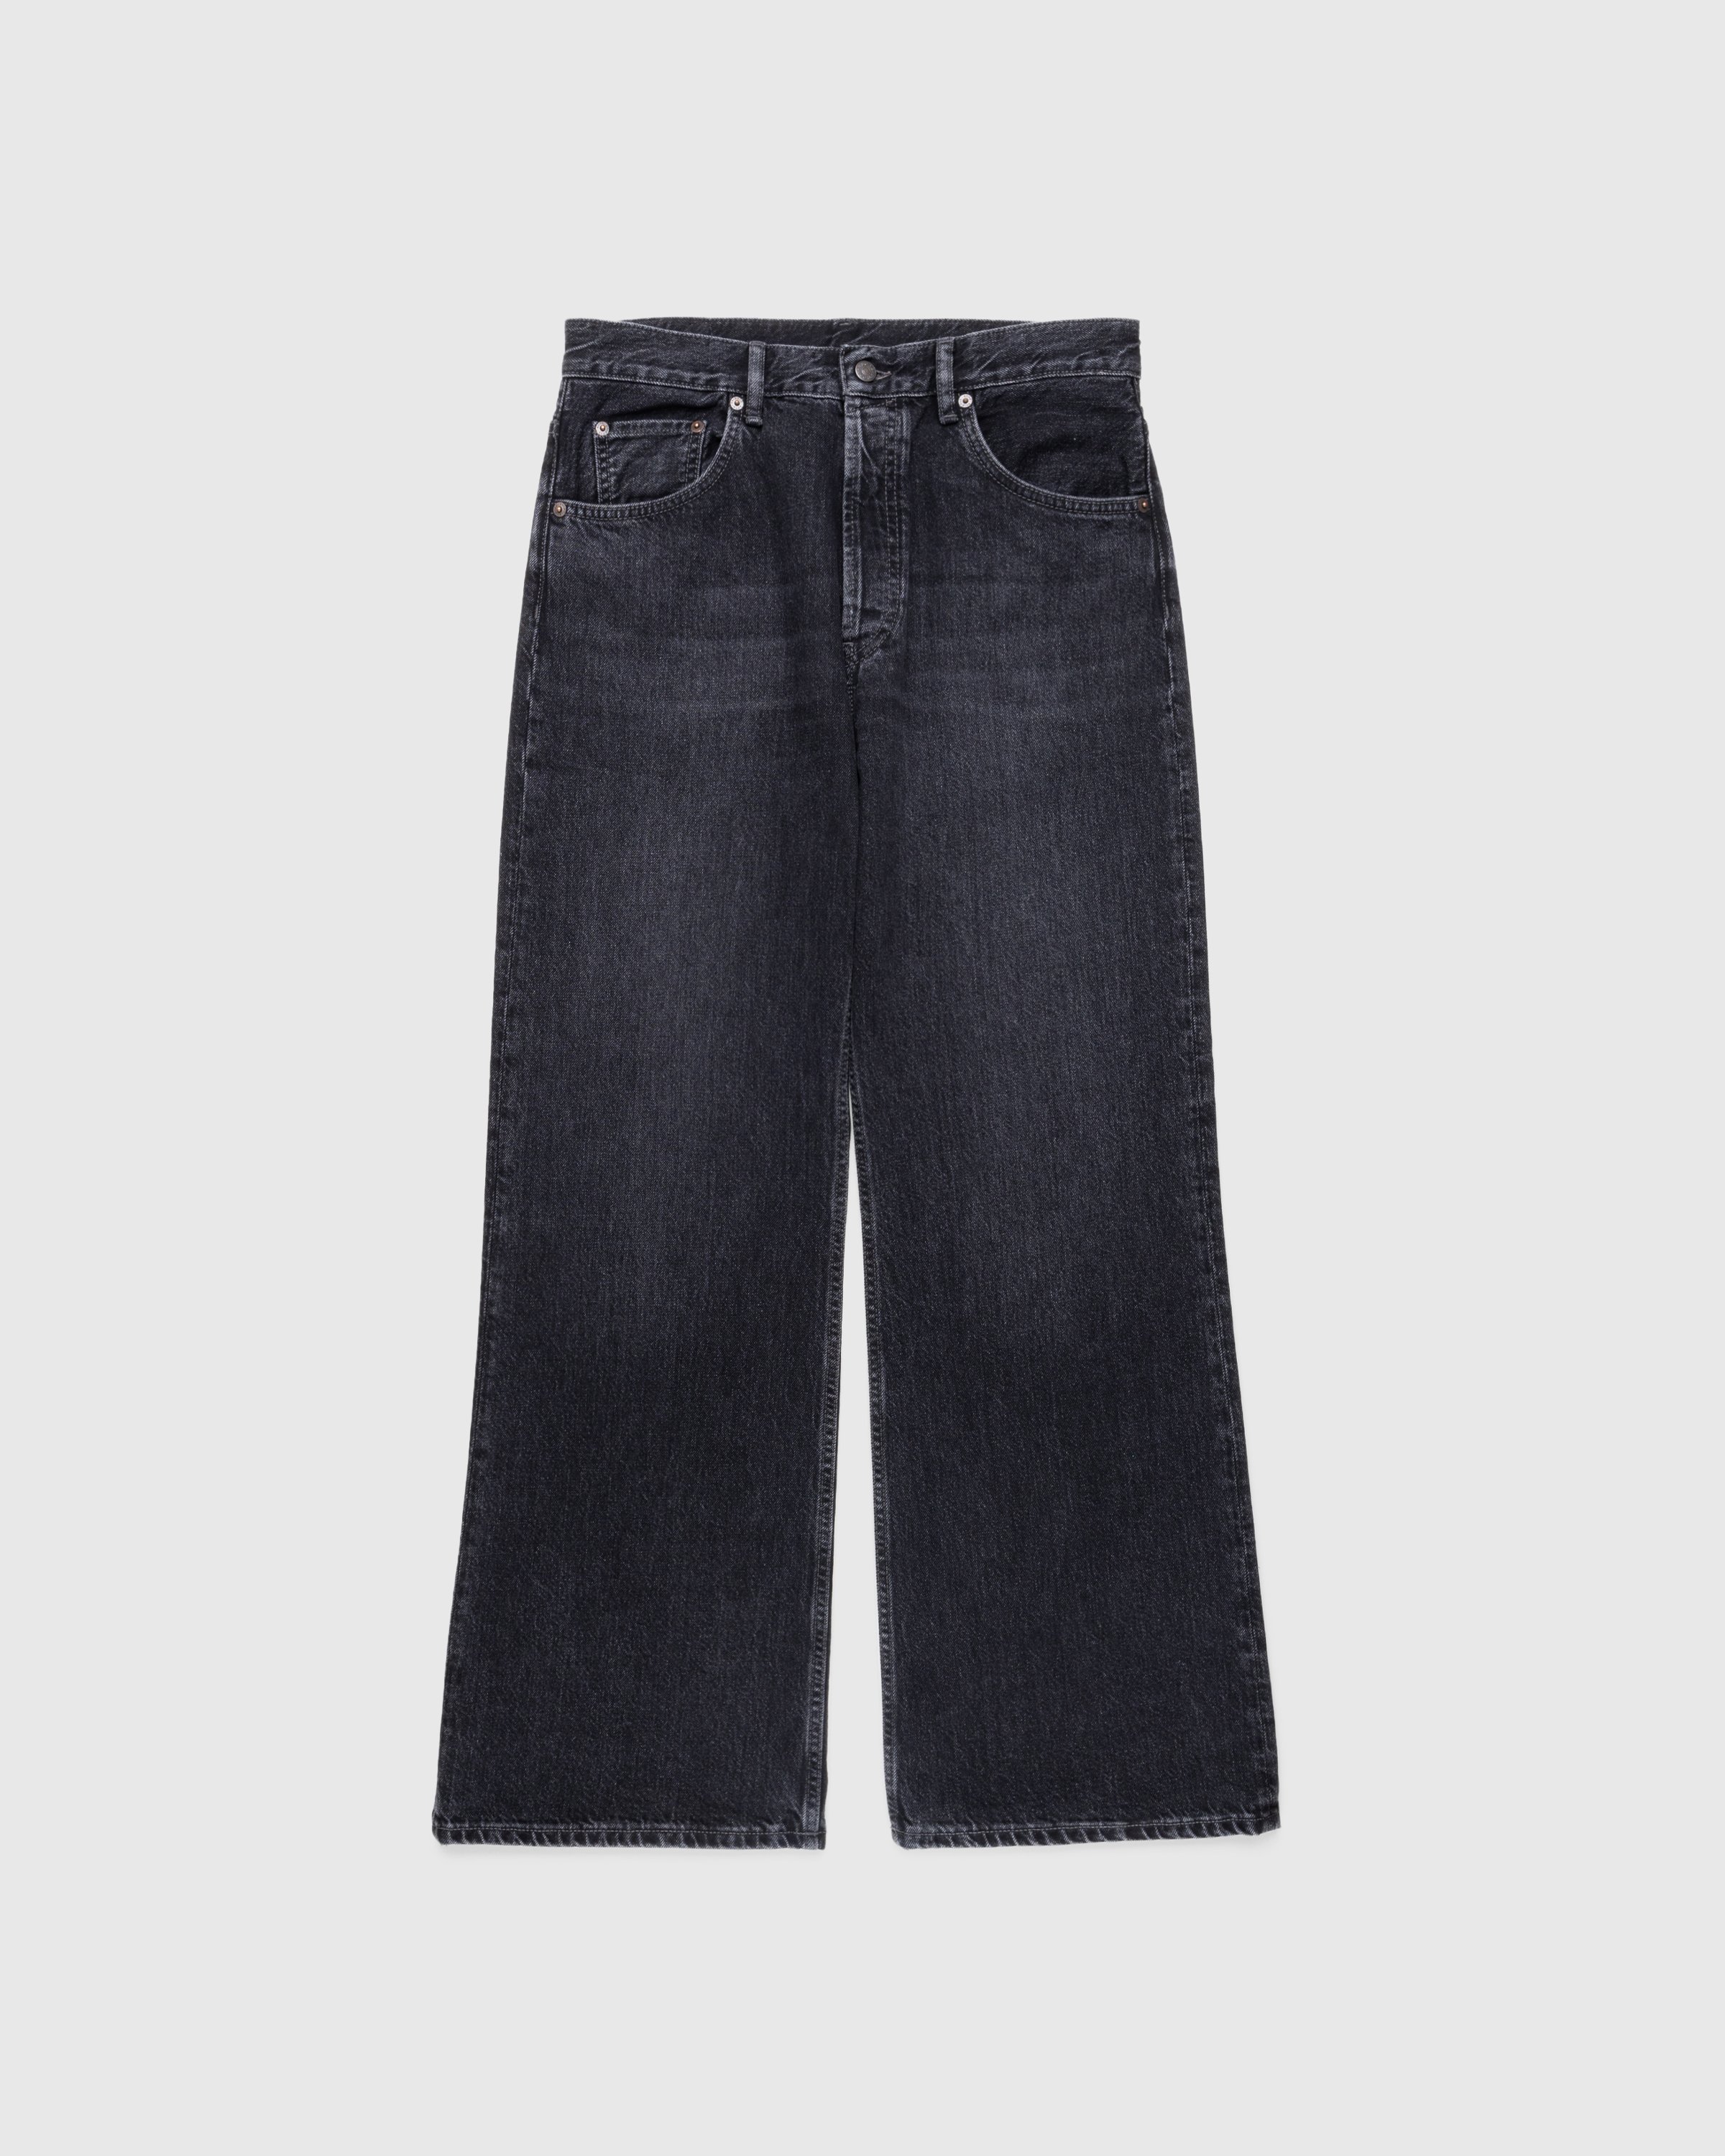 Acne Studios - Loose Fit Jeans 2021 Vintage Black - Clothing - Black - Image 1